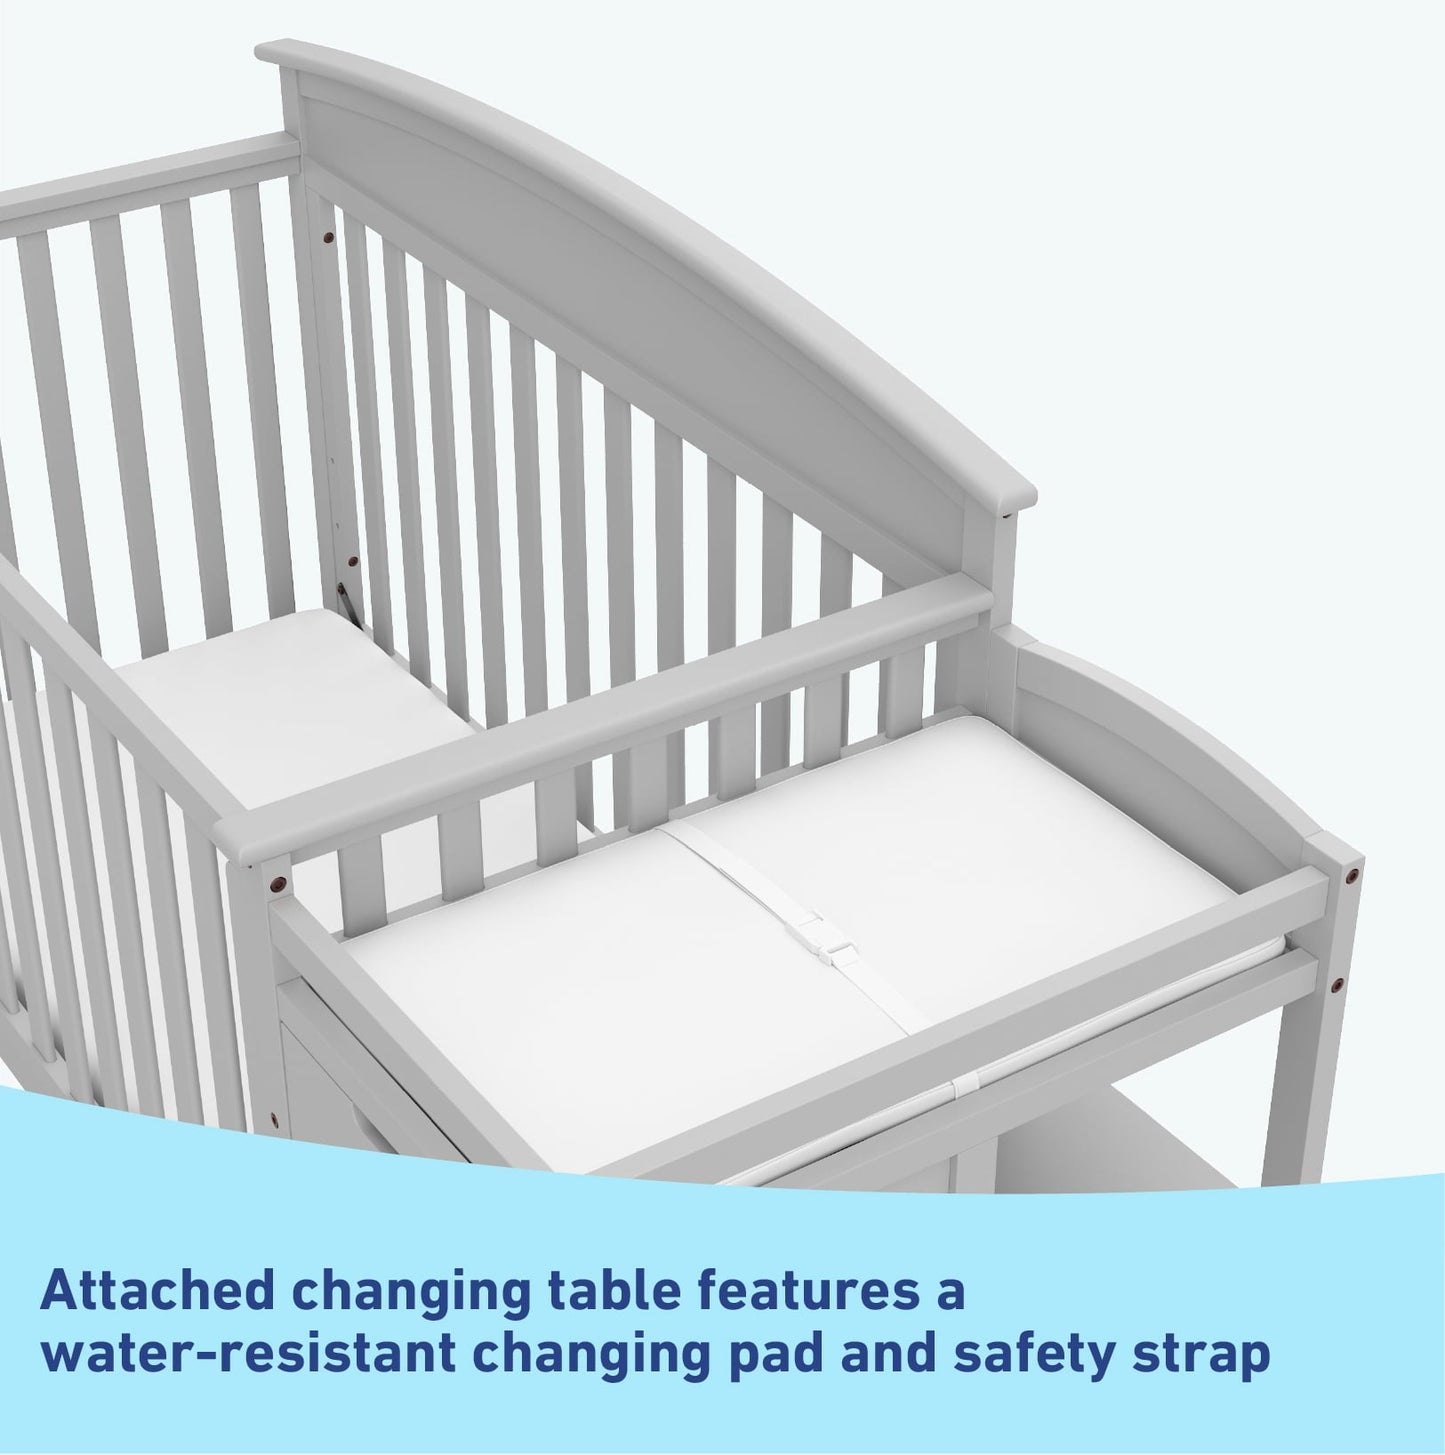 Graco Benton 4-in-1 Convertible Baby Crib and Changer, Pebble Gray